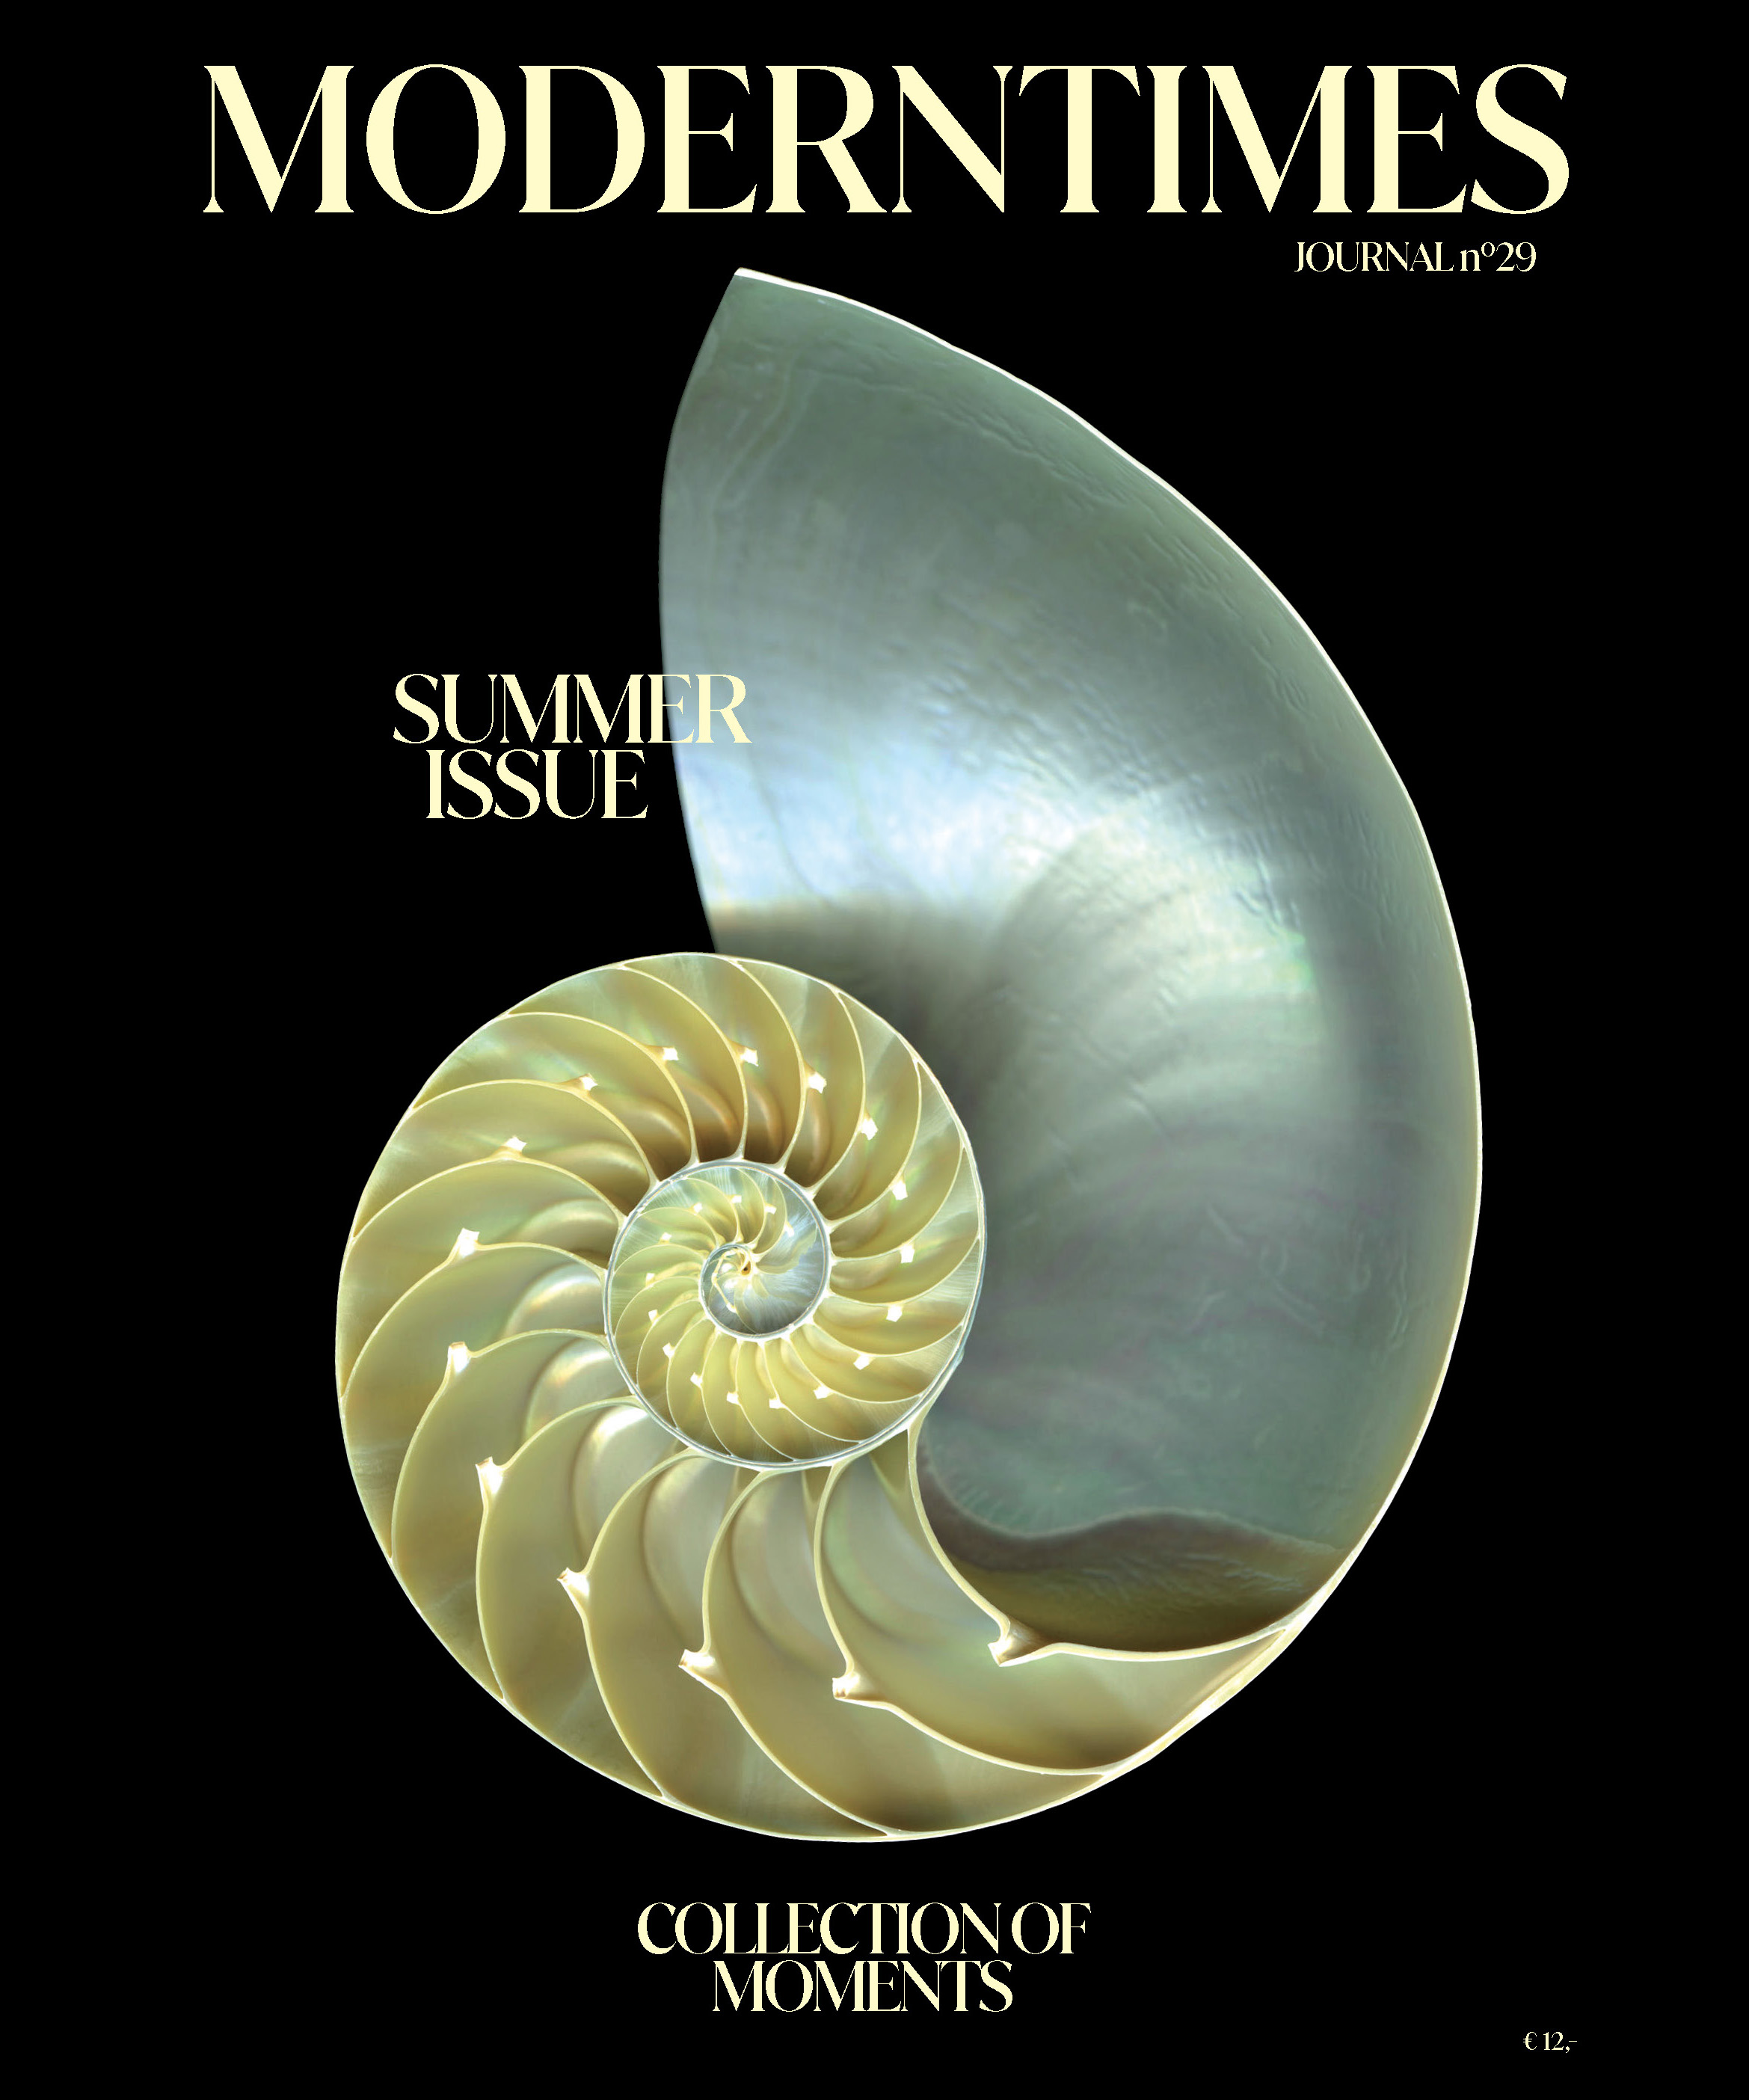 The Modern Times Journal N°29